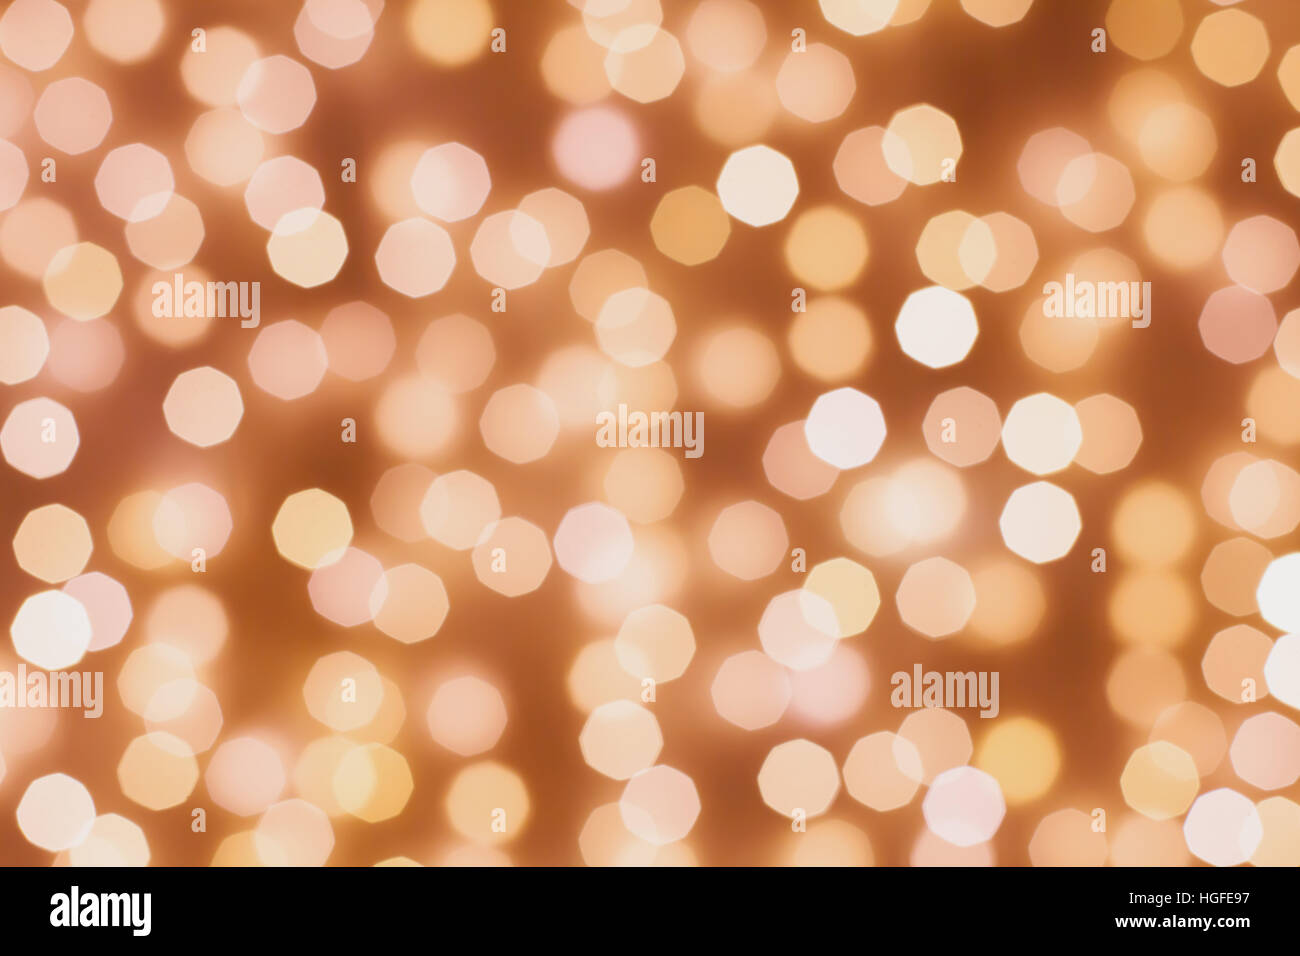 blurred christmas lights festive background Stock Photo